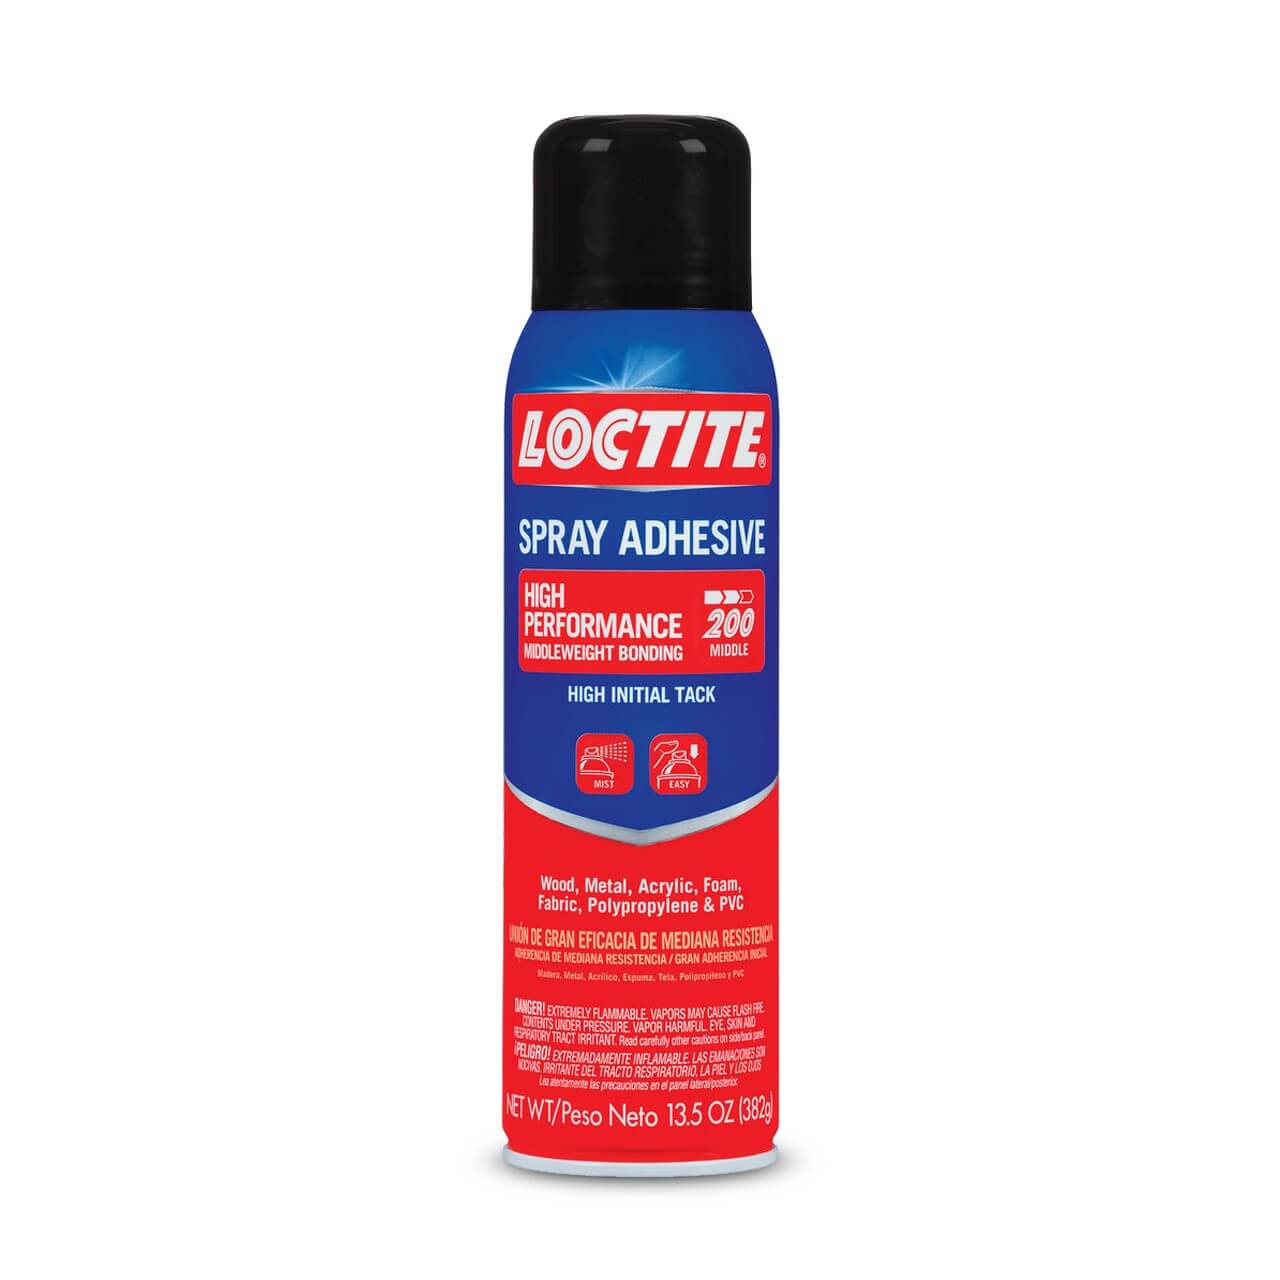 Bottle of Loctite Spray Adhesive